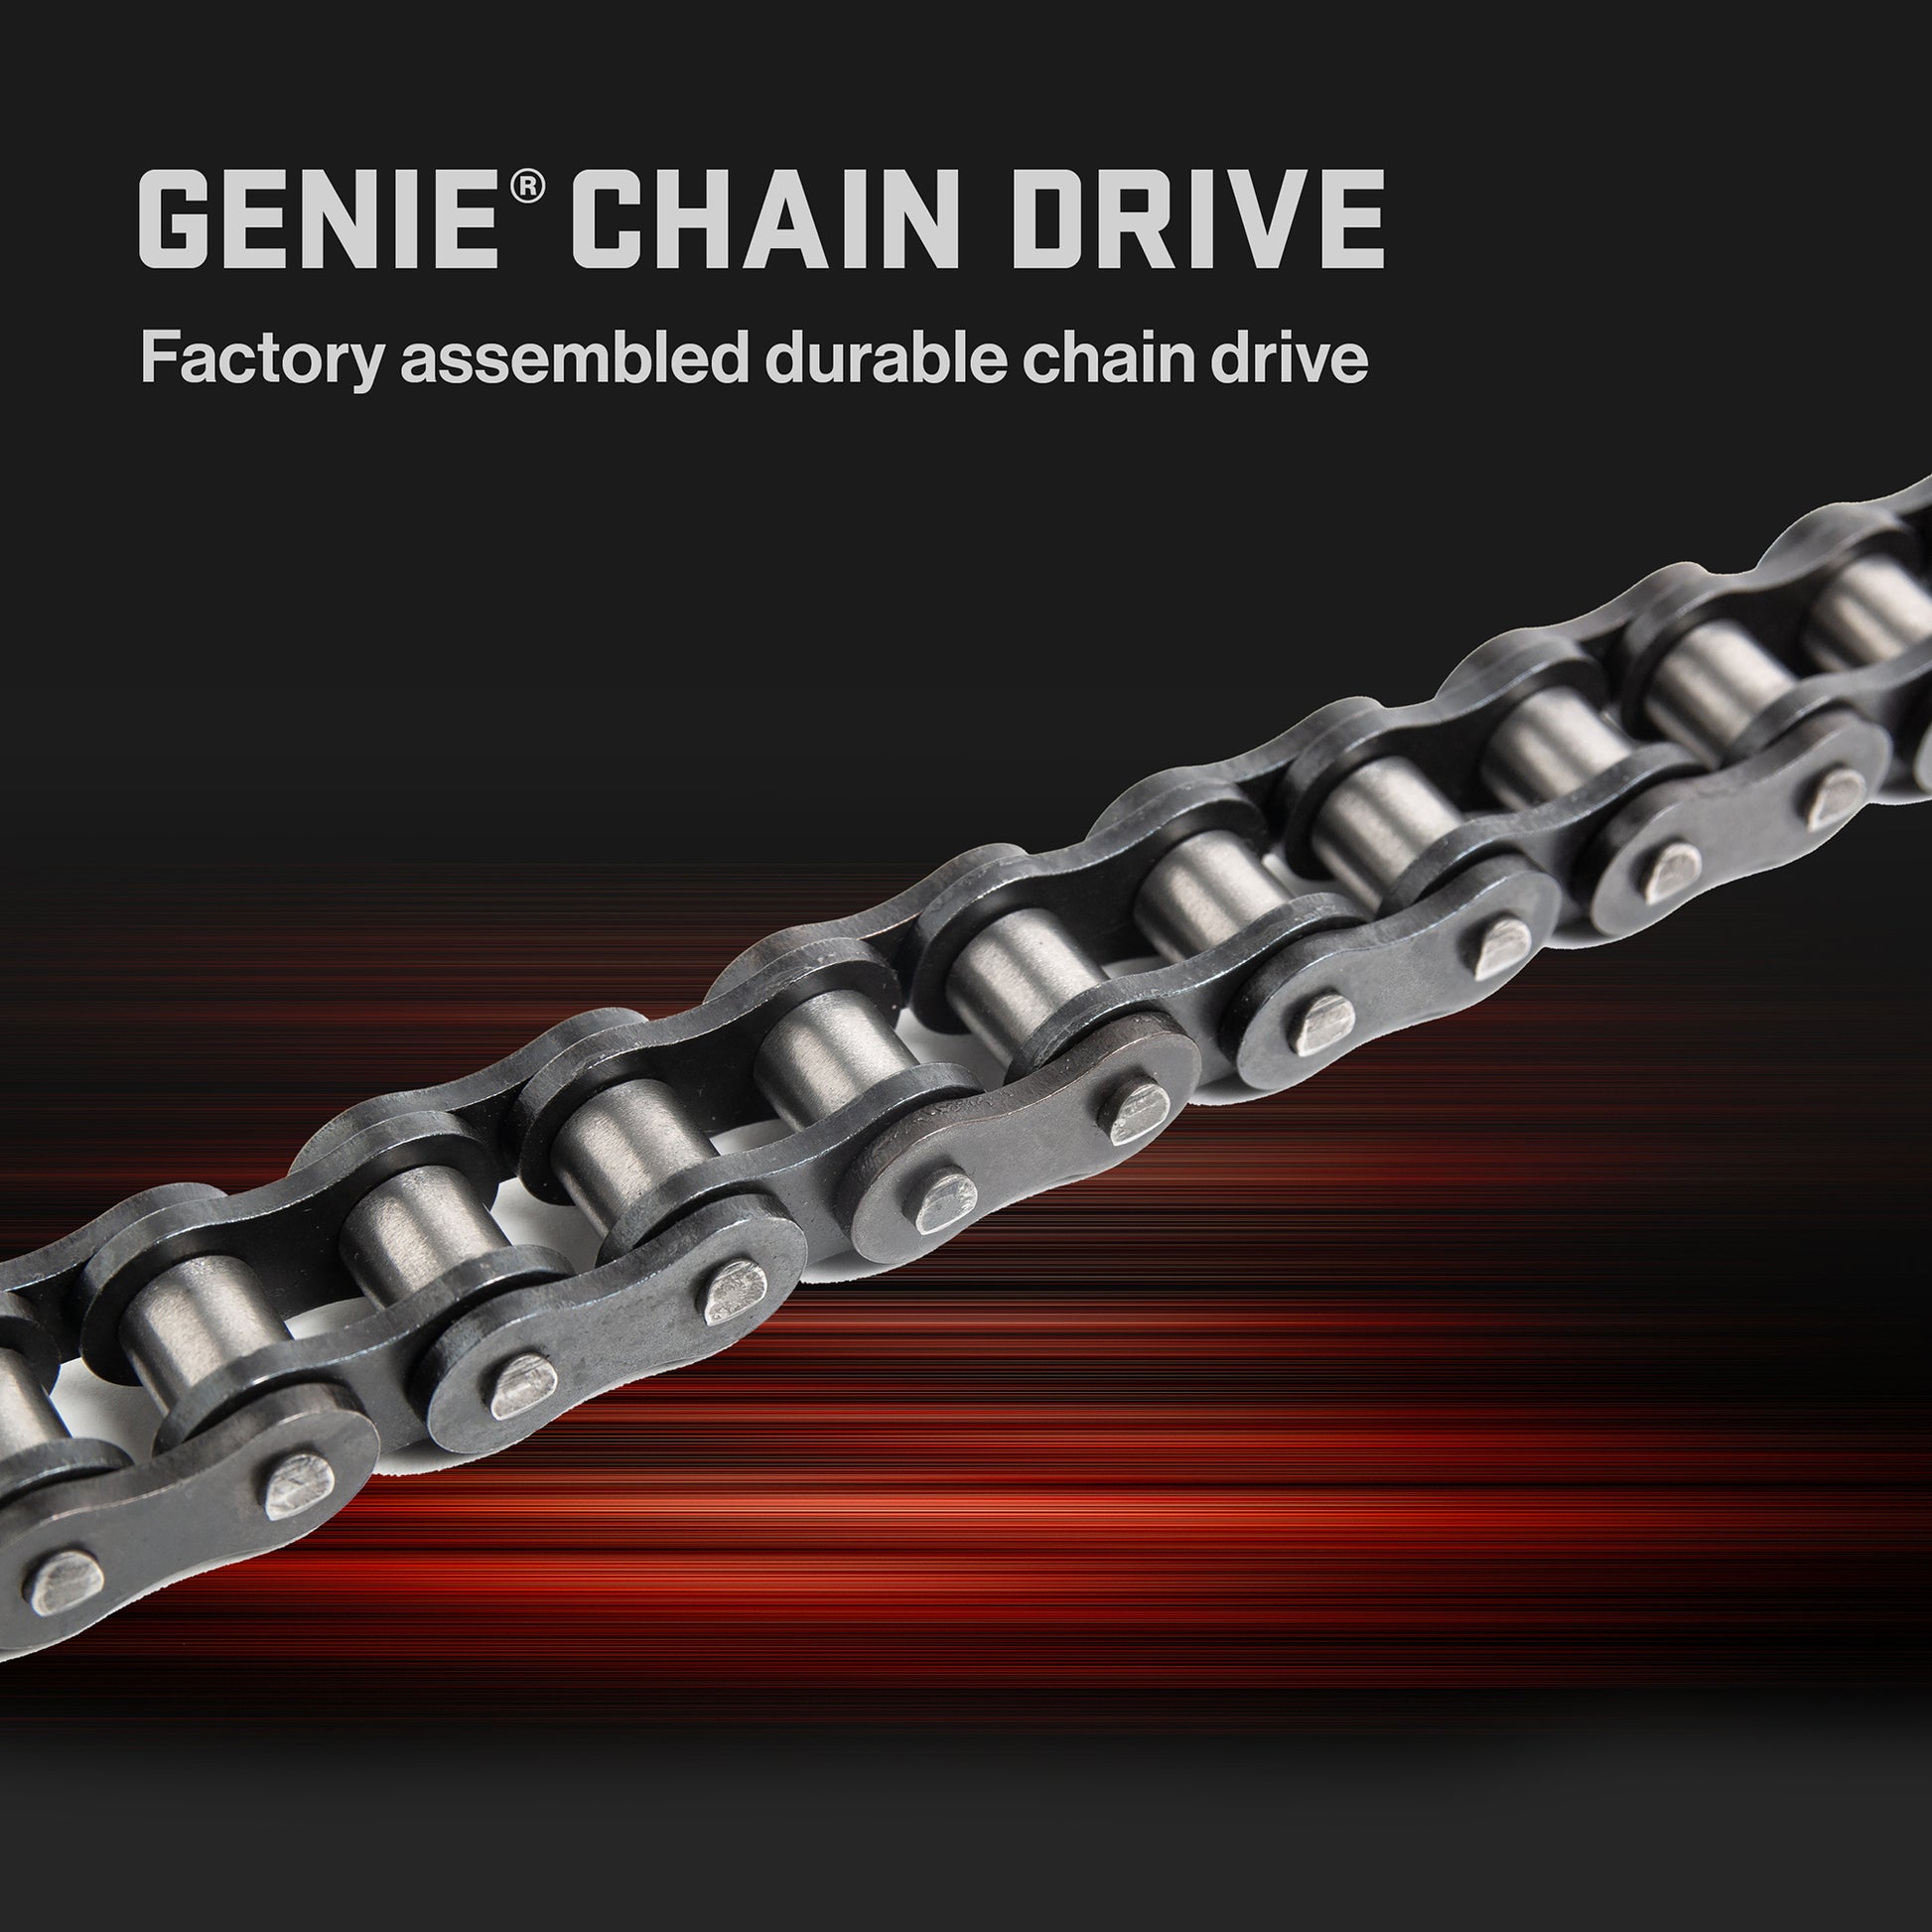 Genie Chain Glide Connect has a factory assembled durable chain